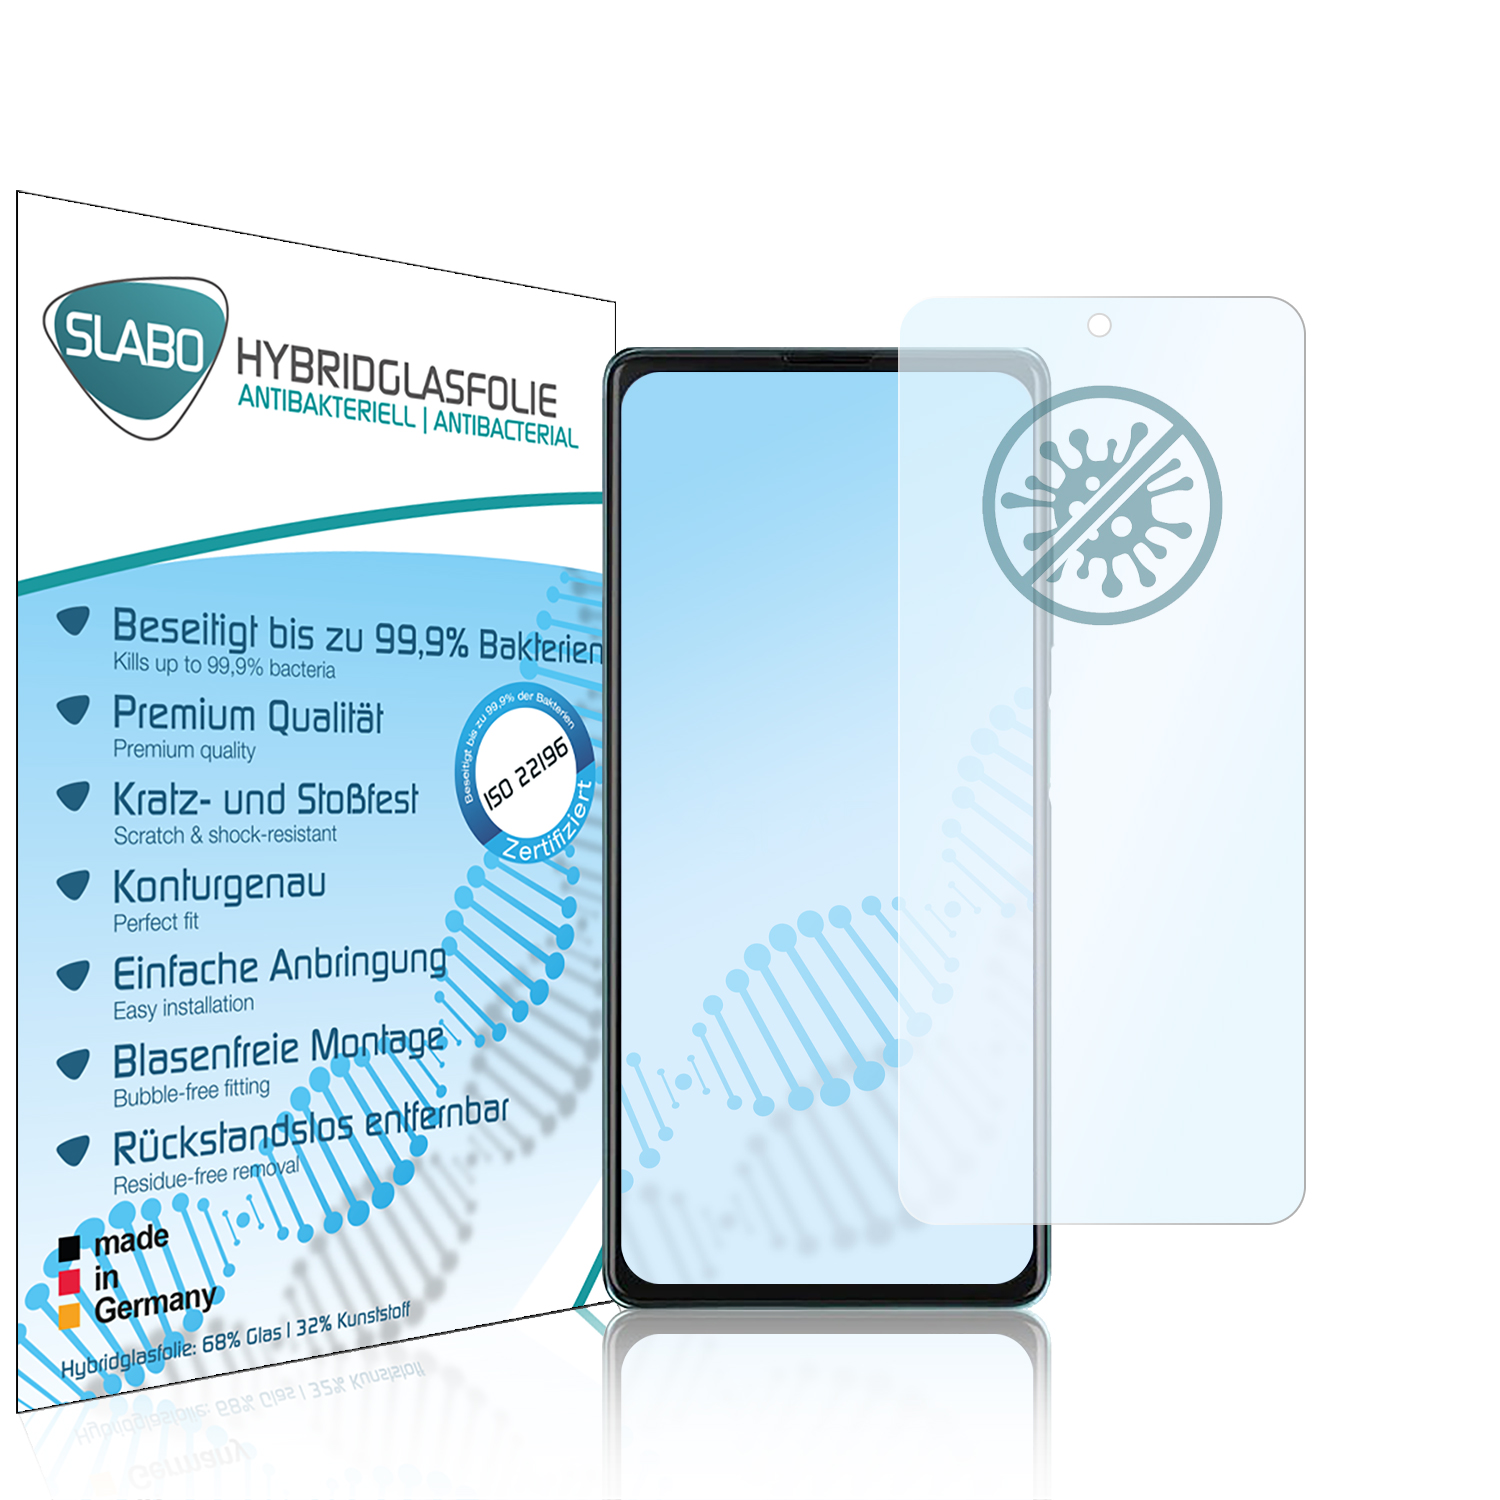 A100) antibakteriell flexibles SLABO Hybridglas Displayschutz(für BlackBerry